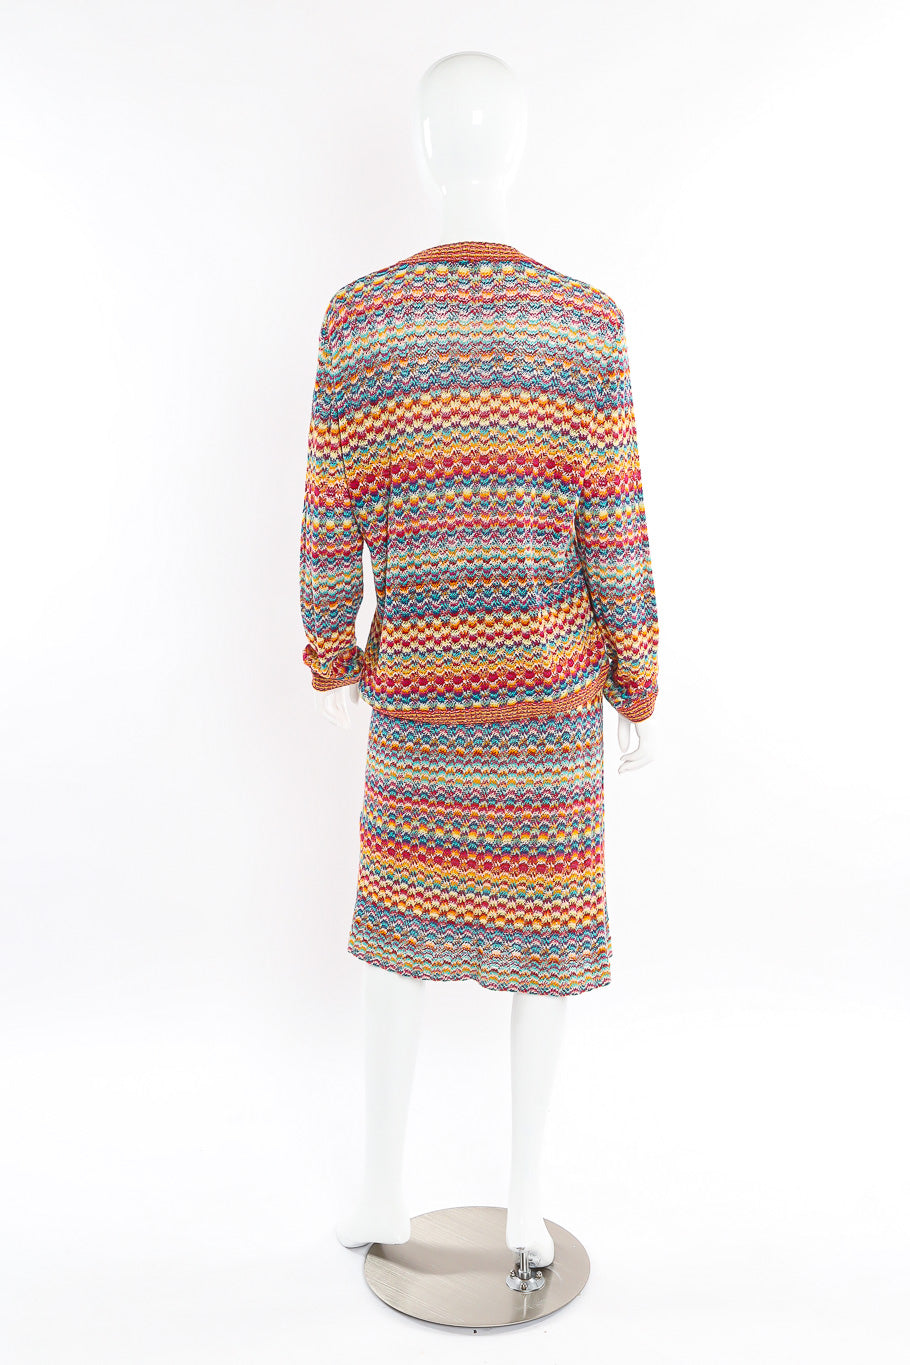 Scallop stripe classic knit 2 piece set by Missoni mannequin back view @recessla